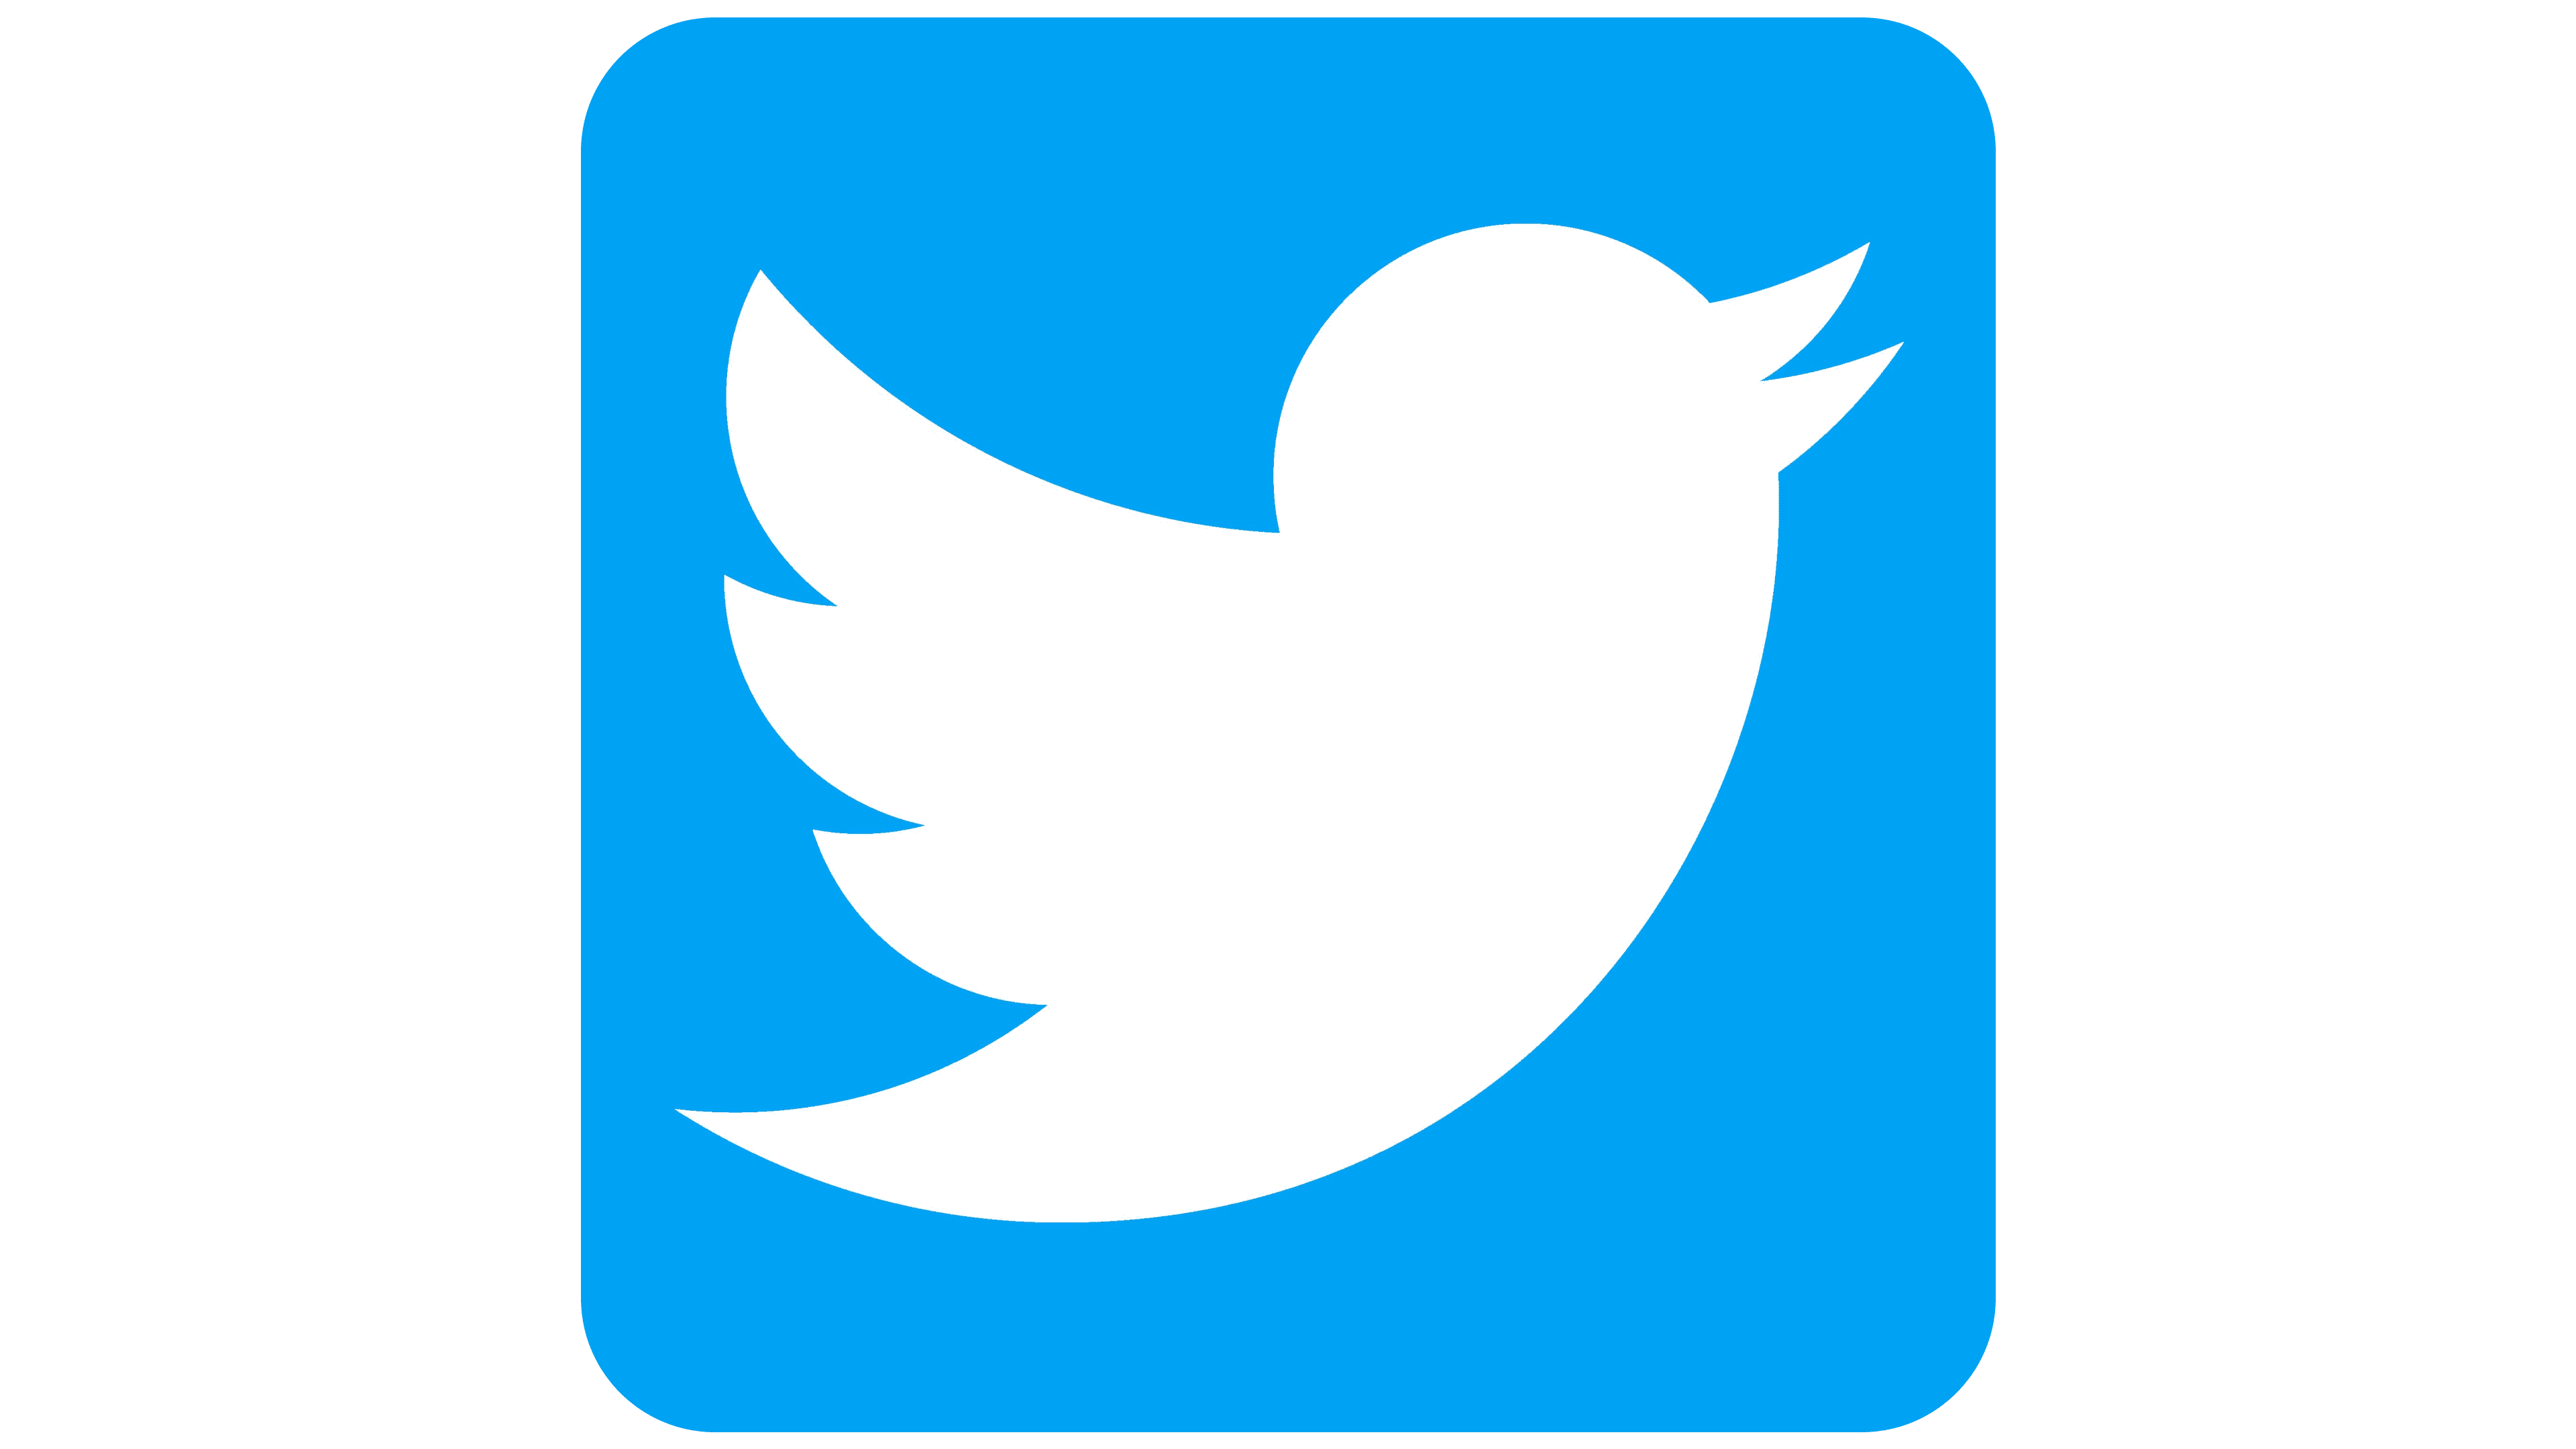 Twitter Emblem